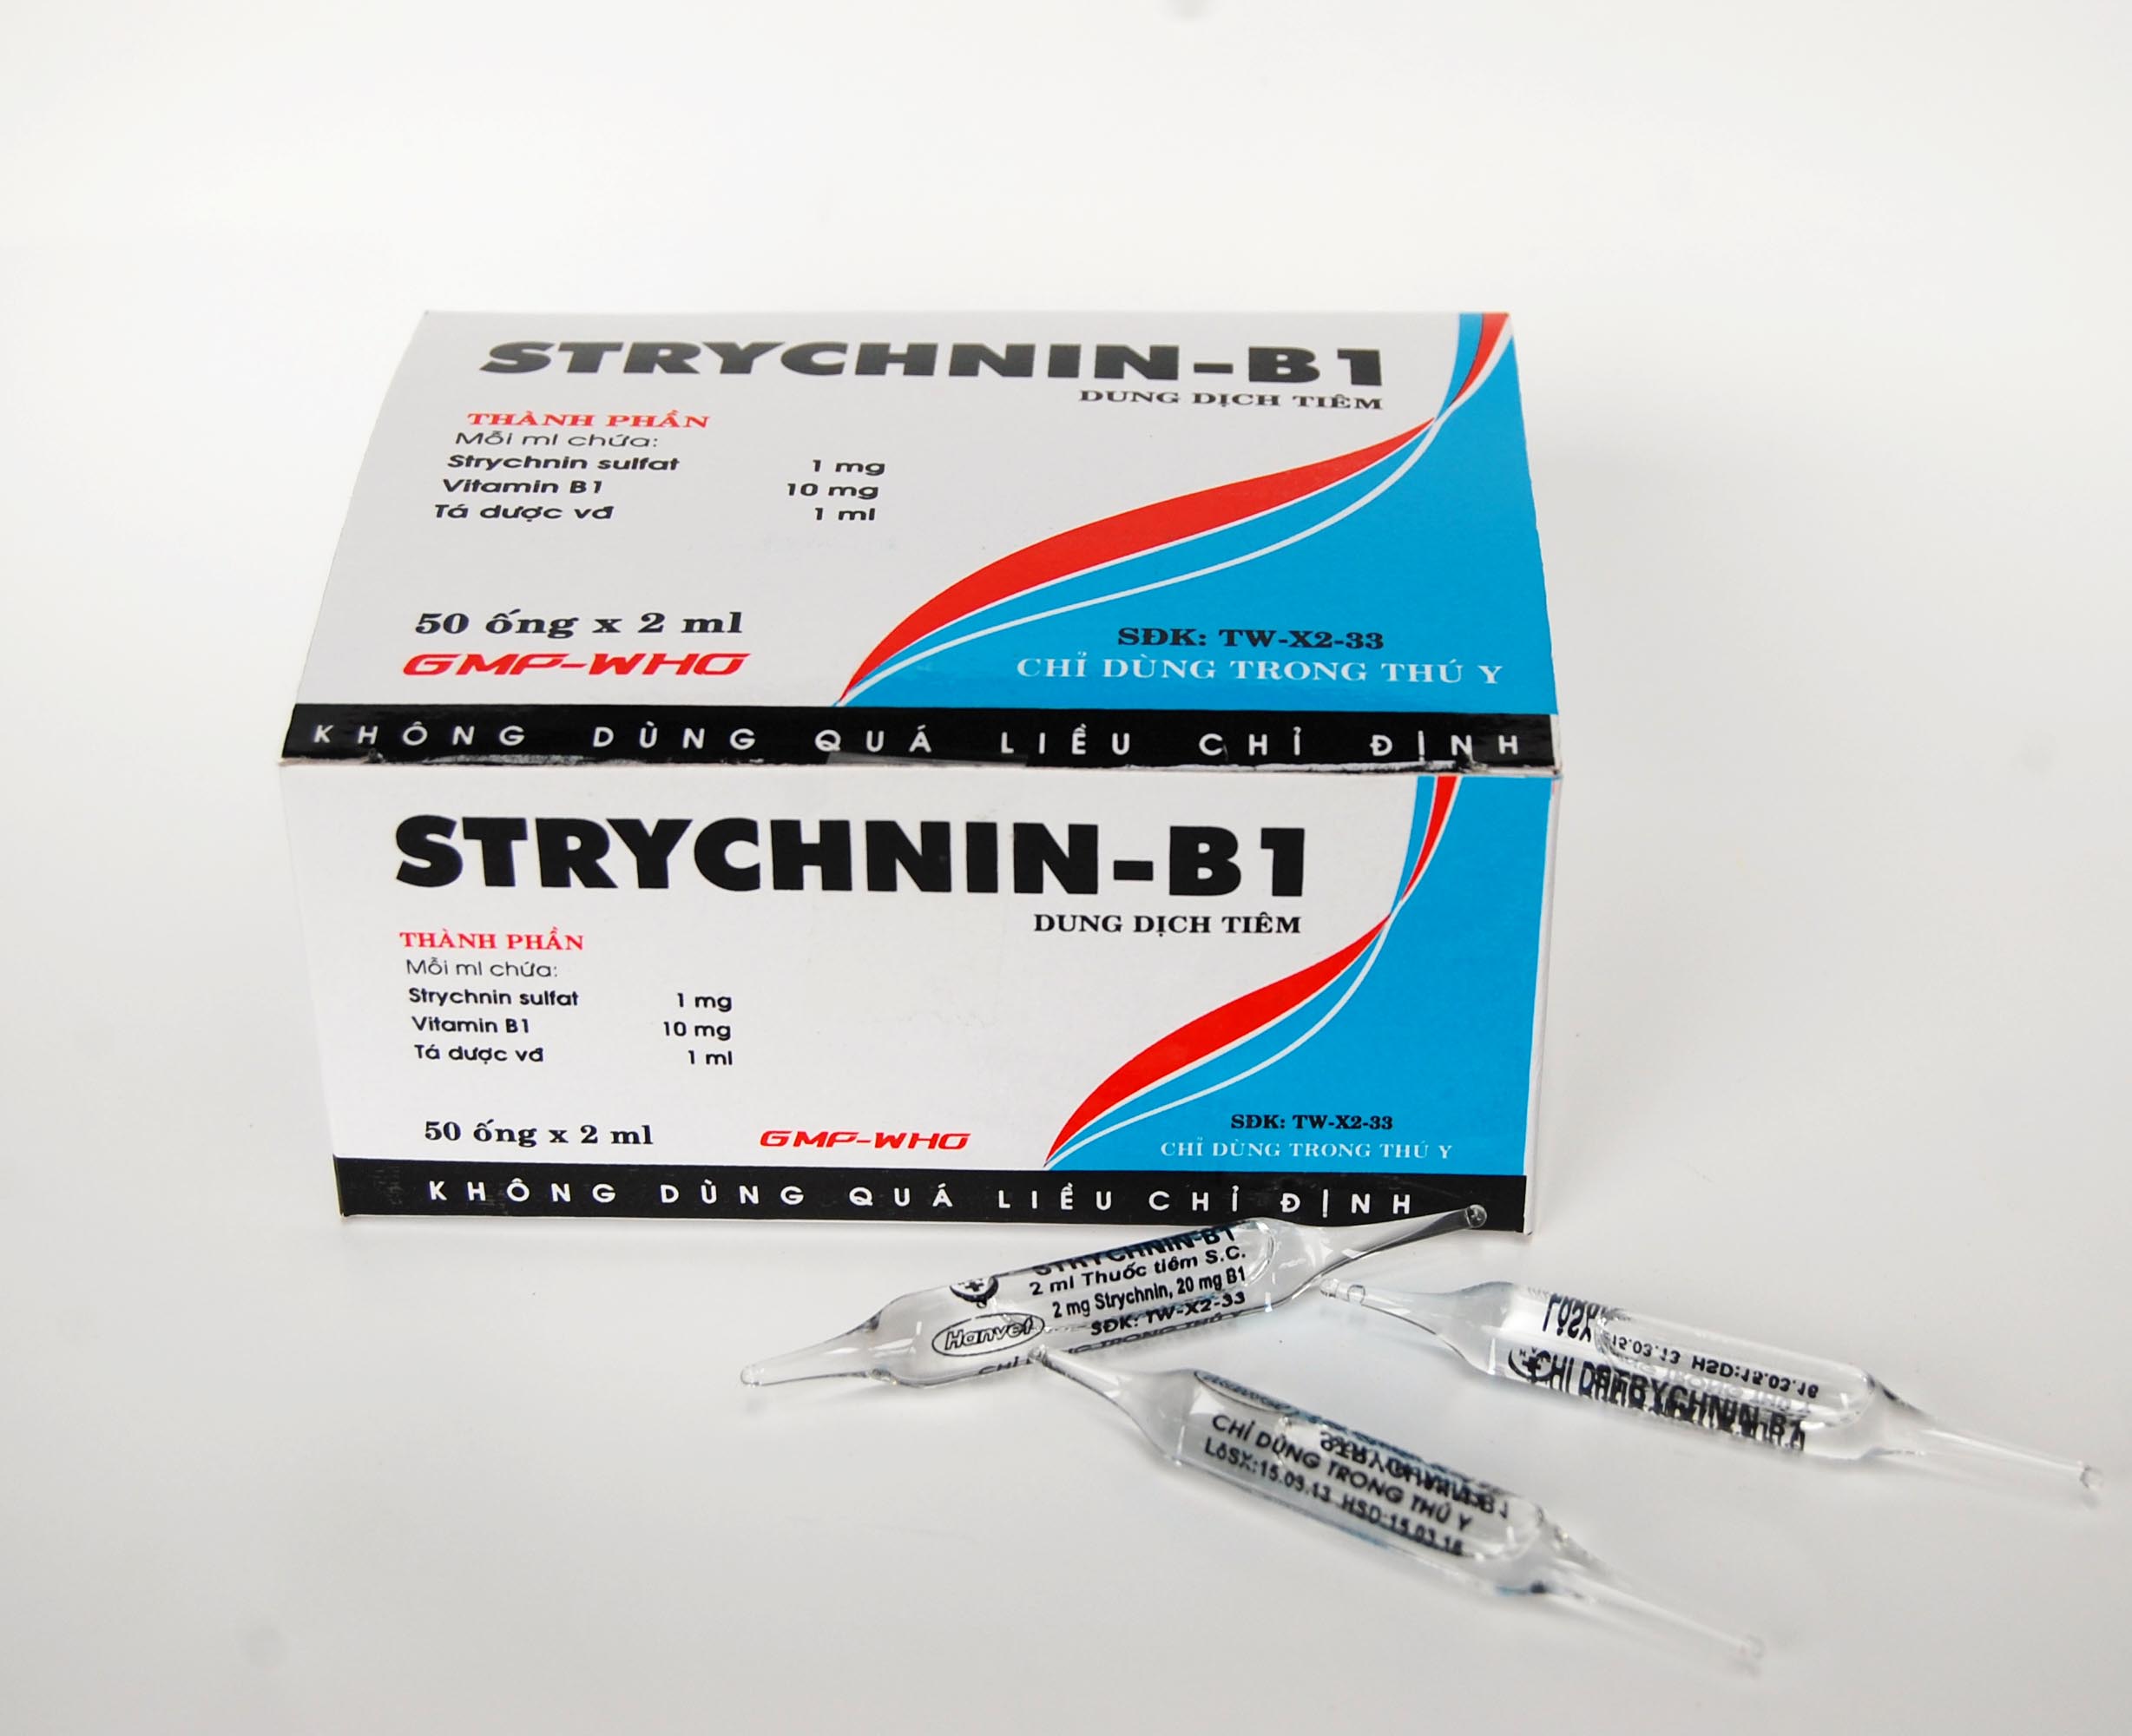 Strychnin-B1